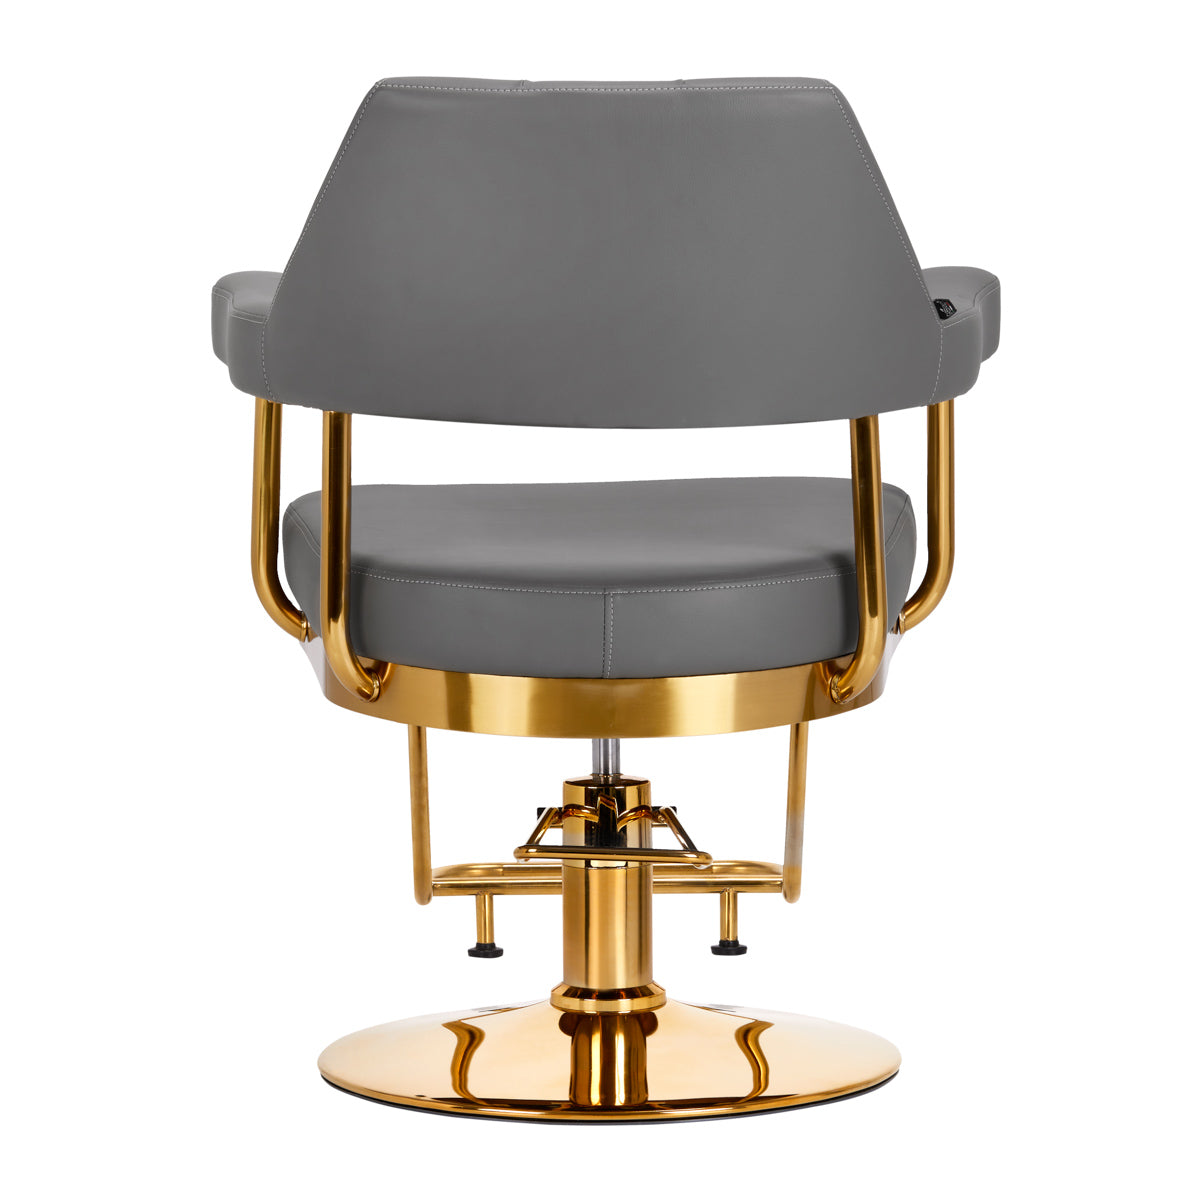 Gabbiano hairdressing chair Granda gold grey